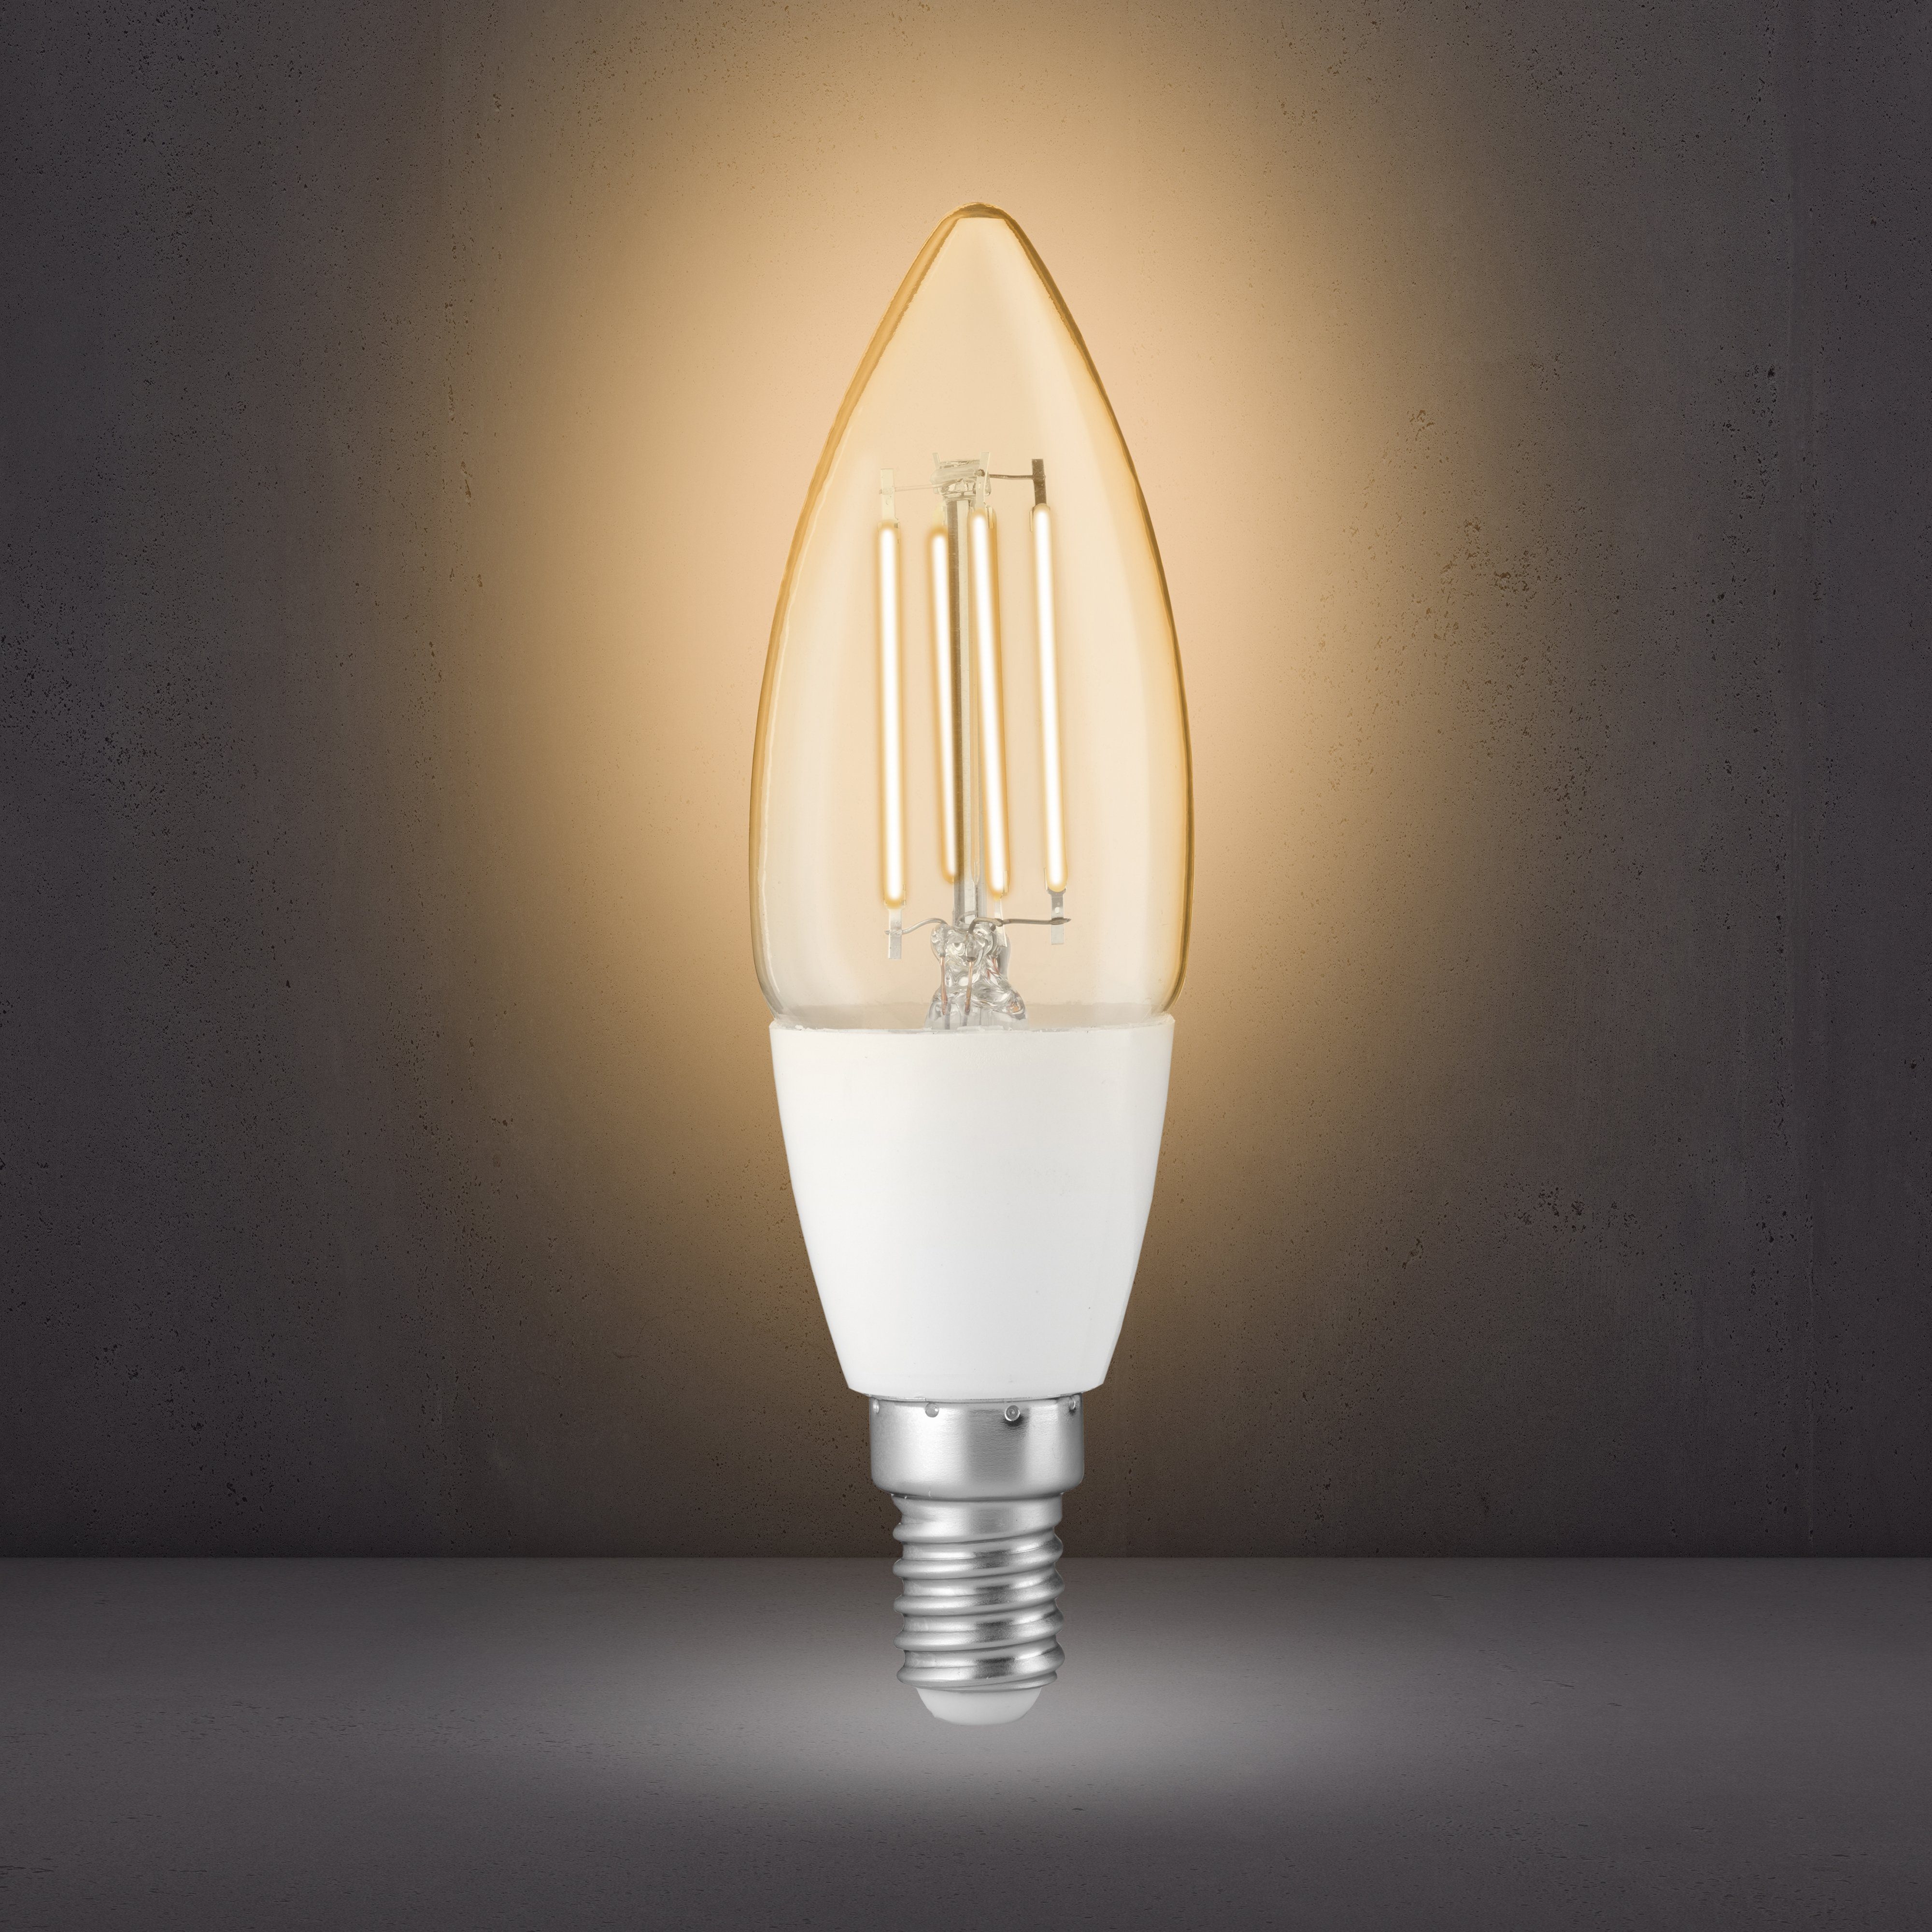 Smarte SMARTLIGHT130 Alecto Lampe